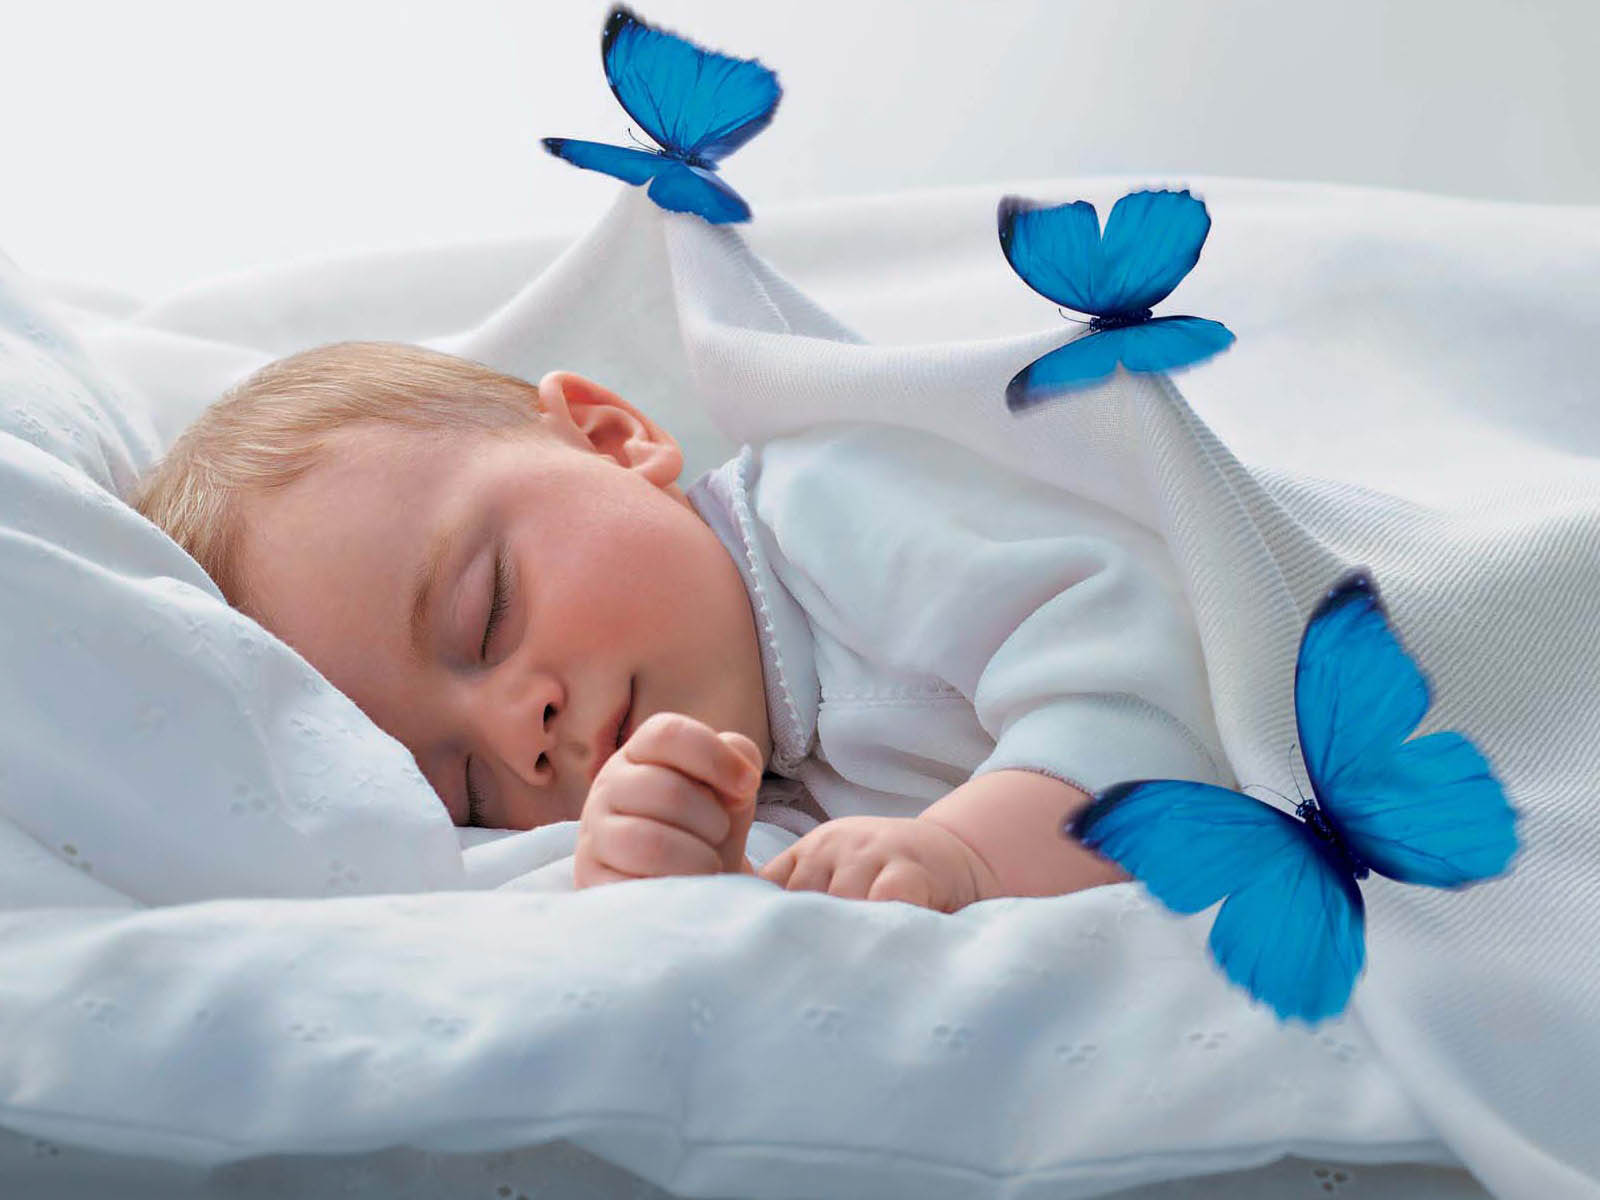 Wallpapers HD Desktop: Sleeping Babies Wallpapers